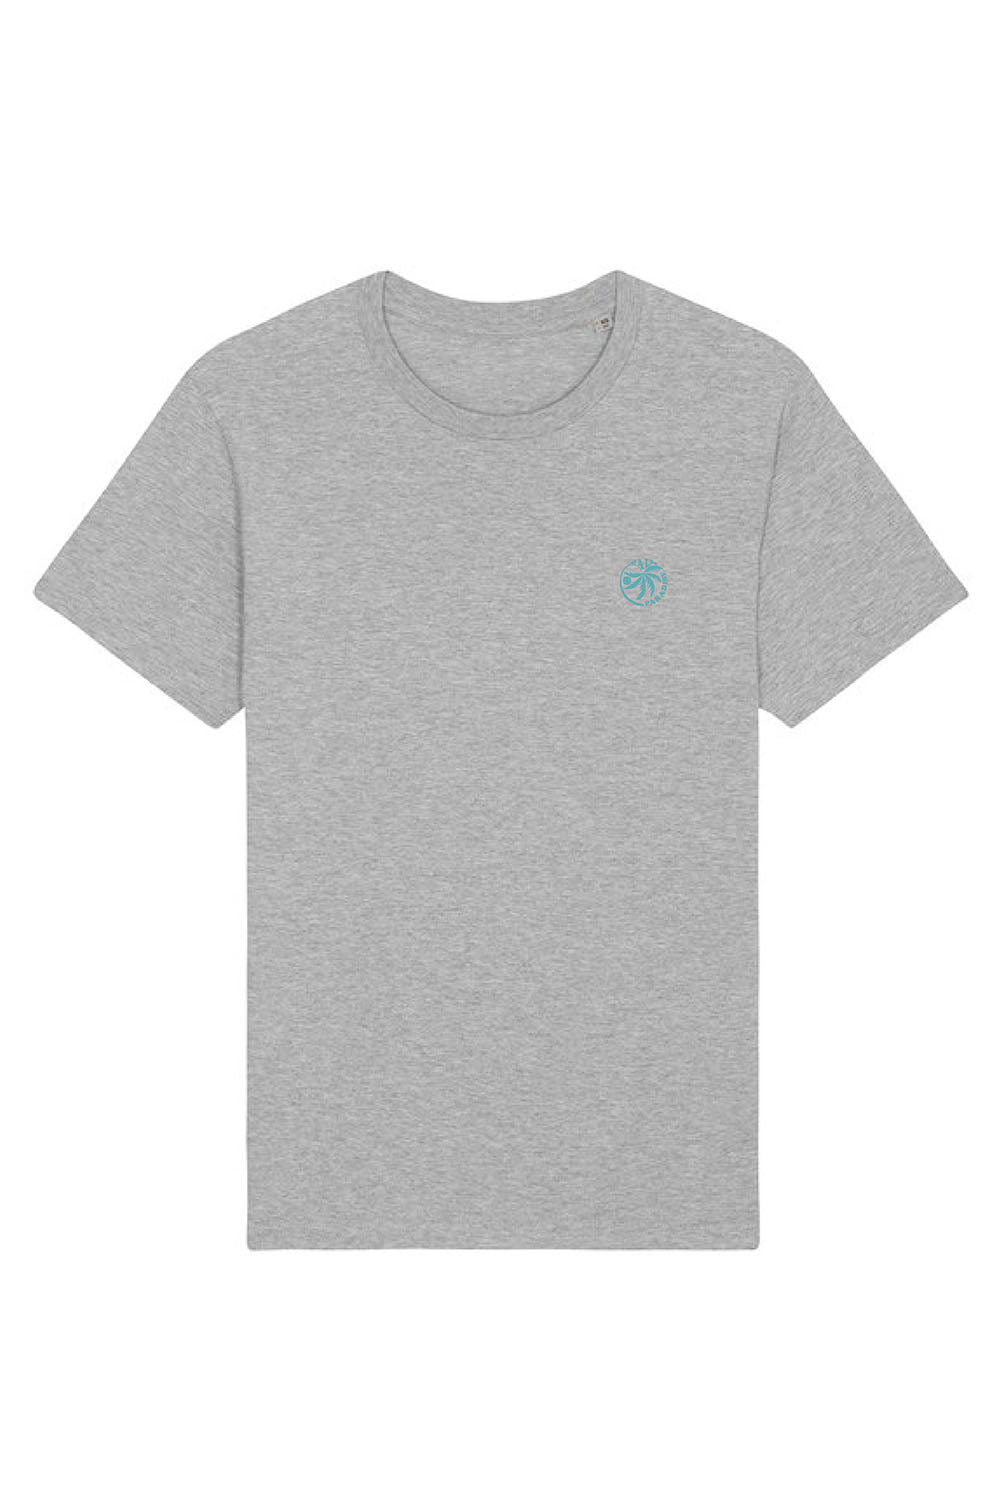 Summer Beach Printed Organic T-Shirt (Pack of 4)